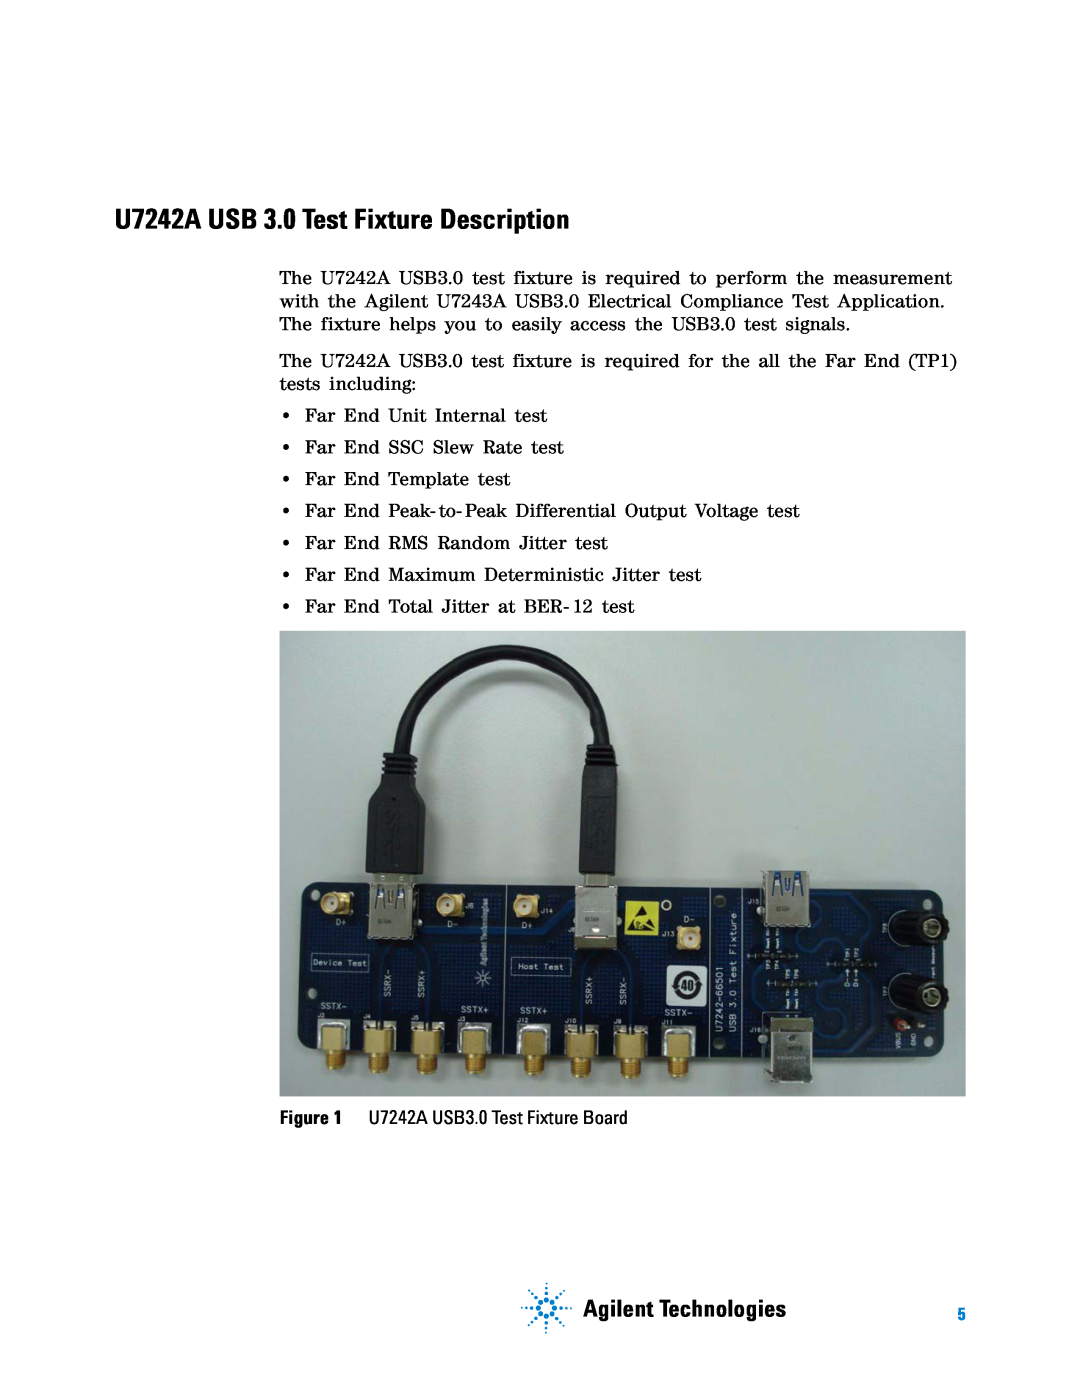 Agilent Technologies manual U7242A USB 3.0 Test Fixture Description, Agilent Technologies 